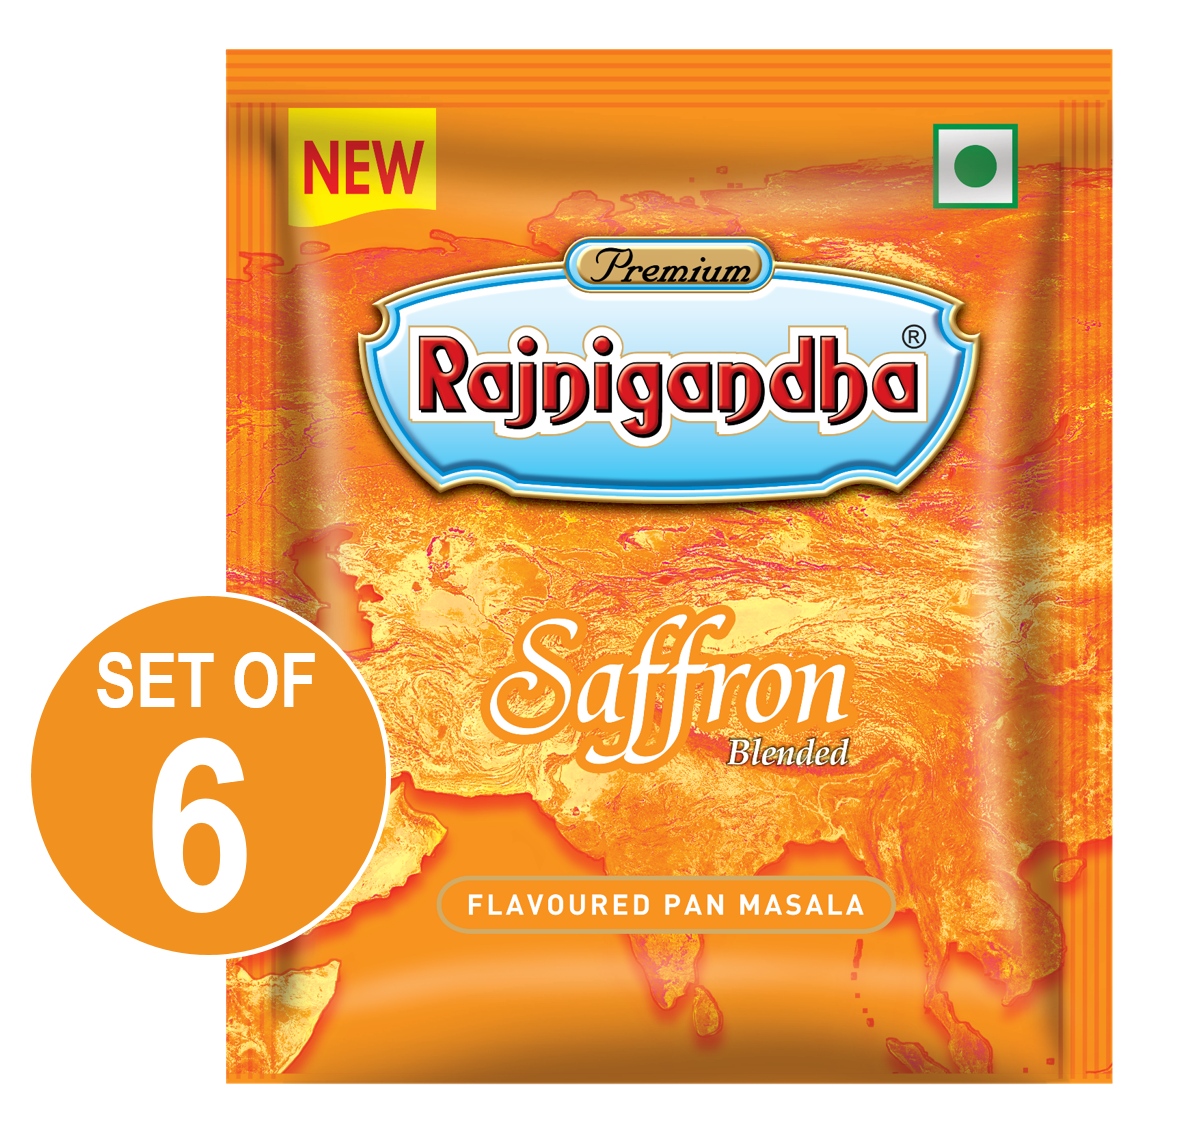 Rajnigandha Saffron ₹ 50.00 Pack